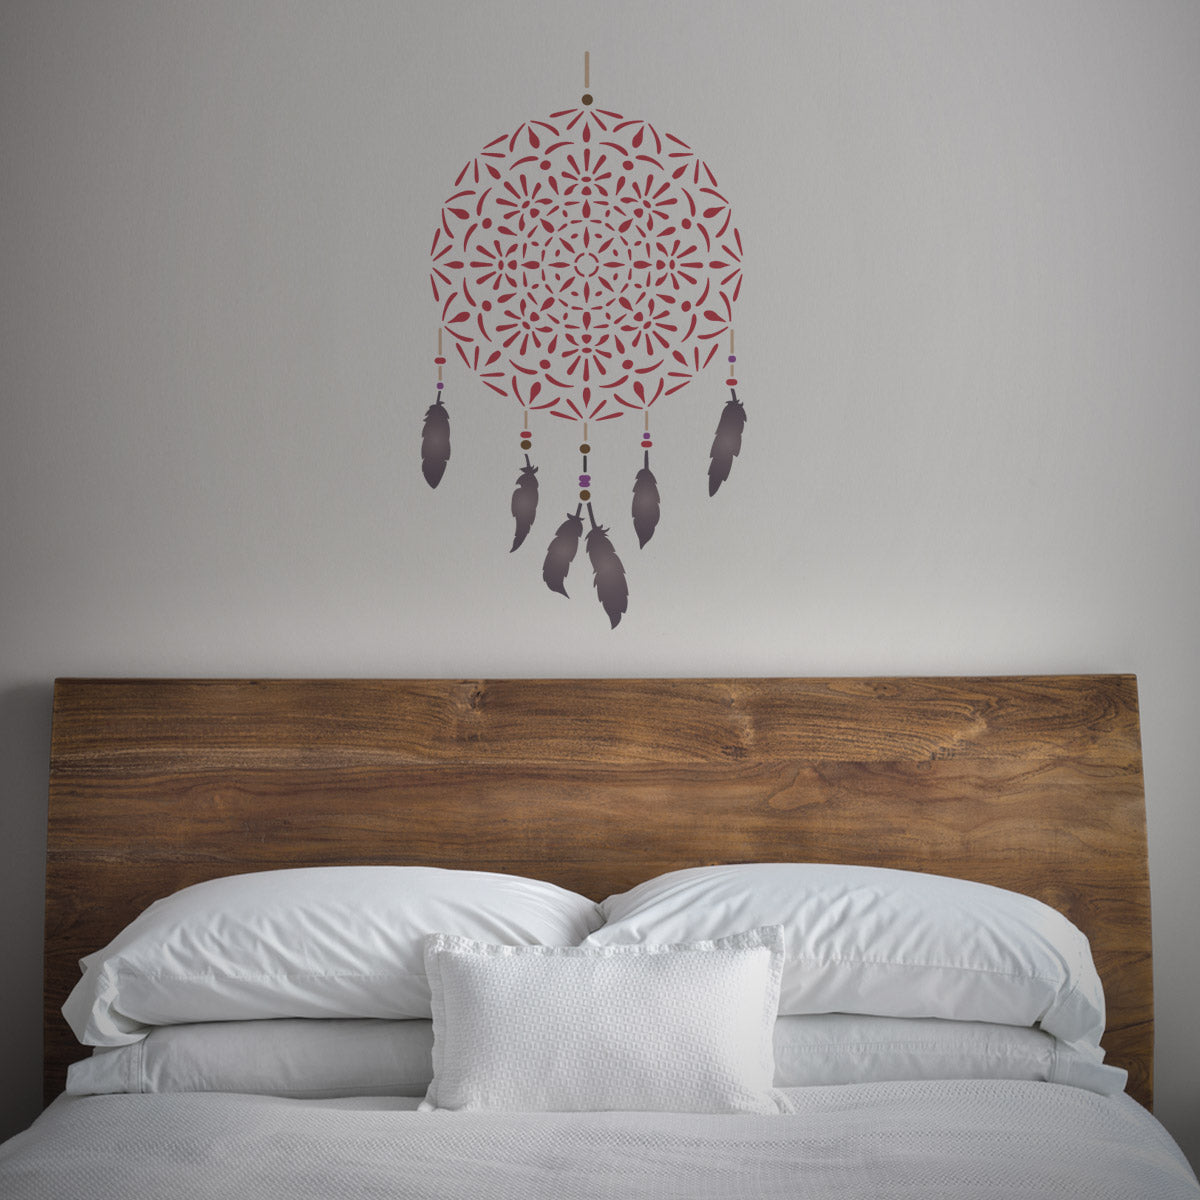 CraftStar Mandala Dreamcatcher Wall Stencil over Bed